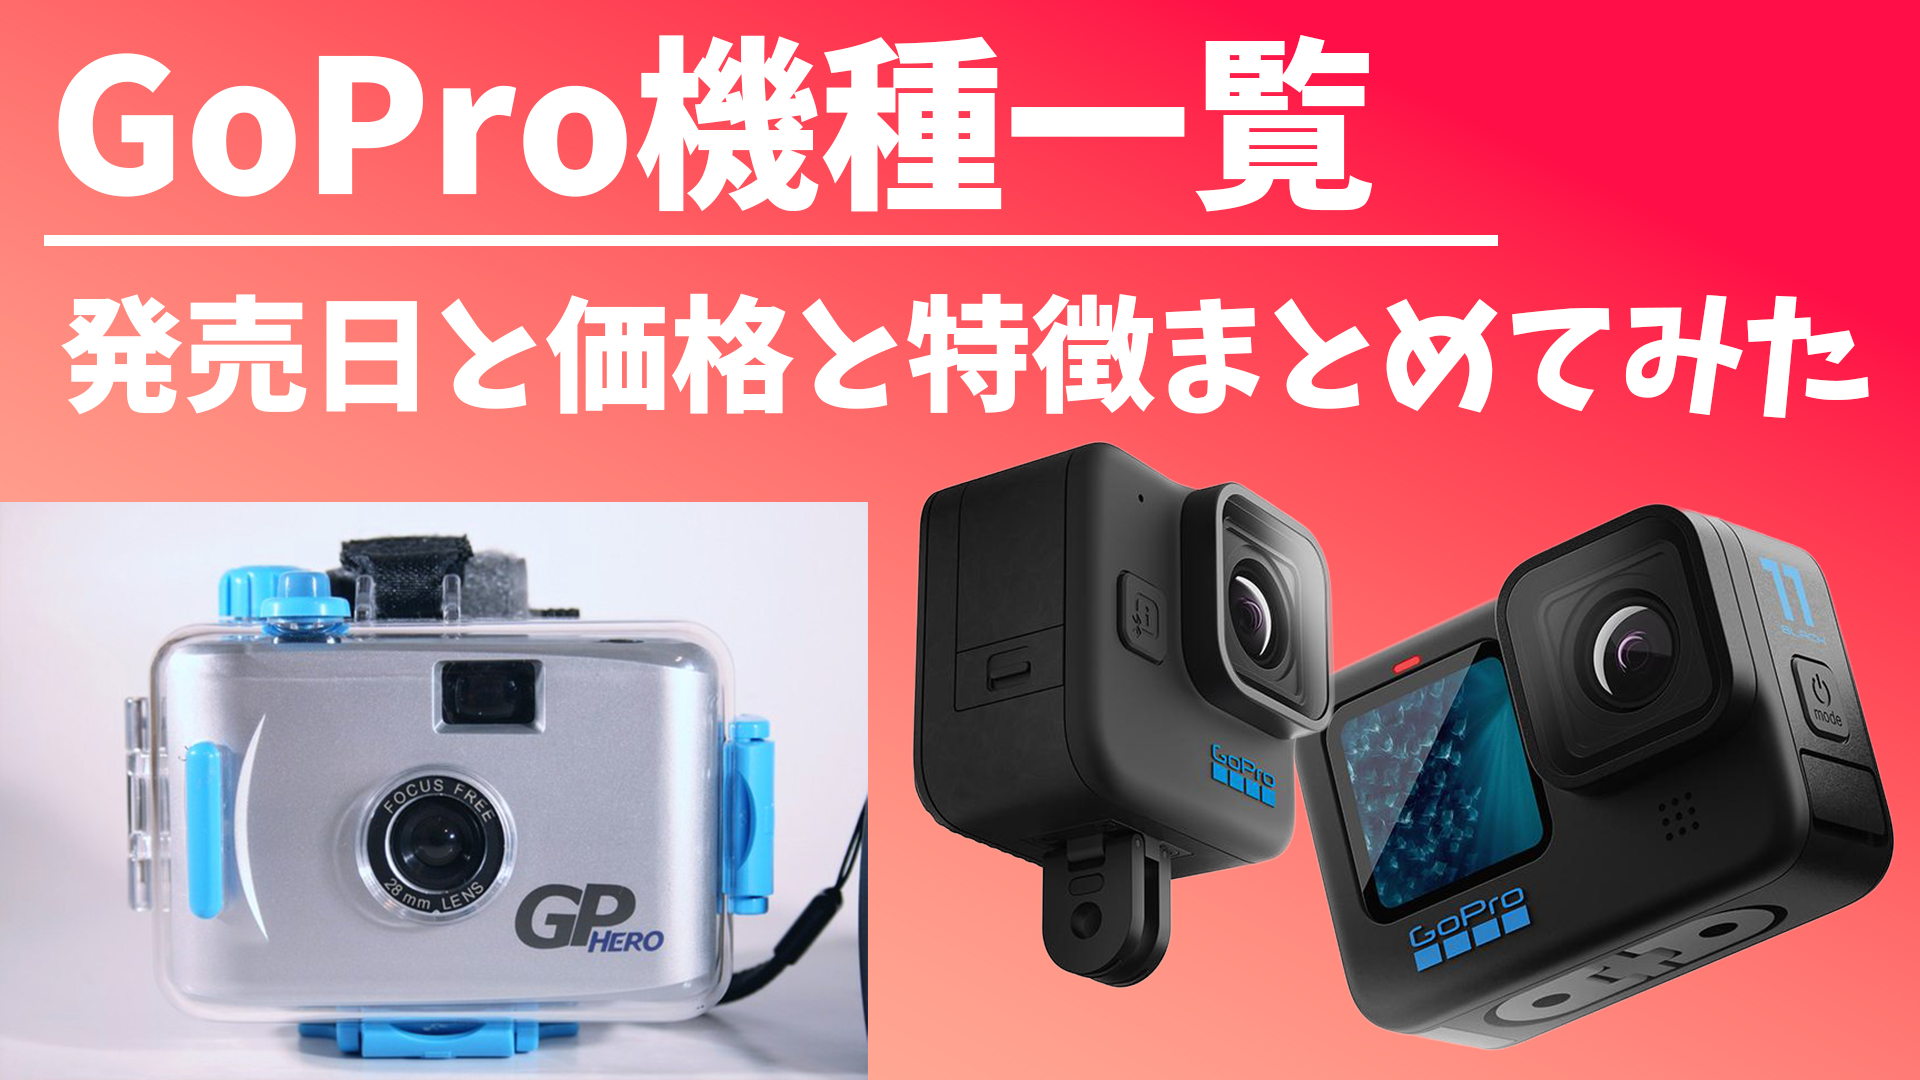 GoProシリーズ 機種 カメラ一覧